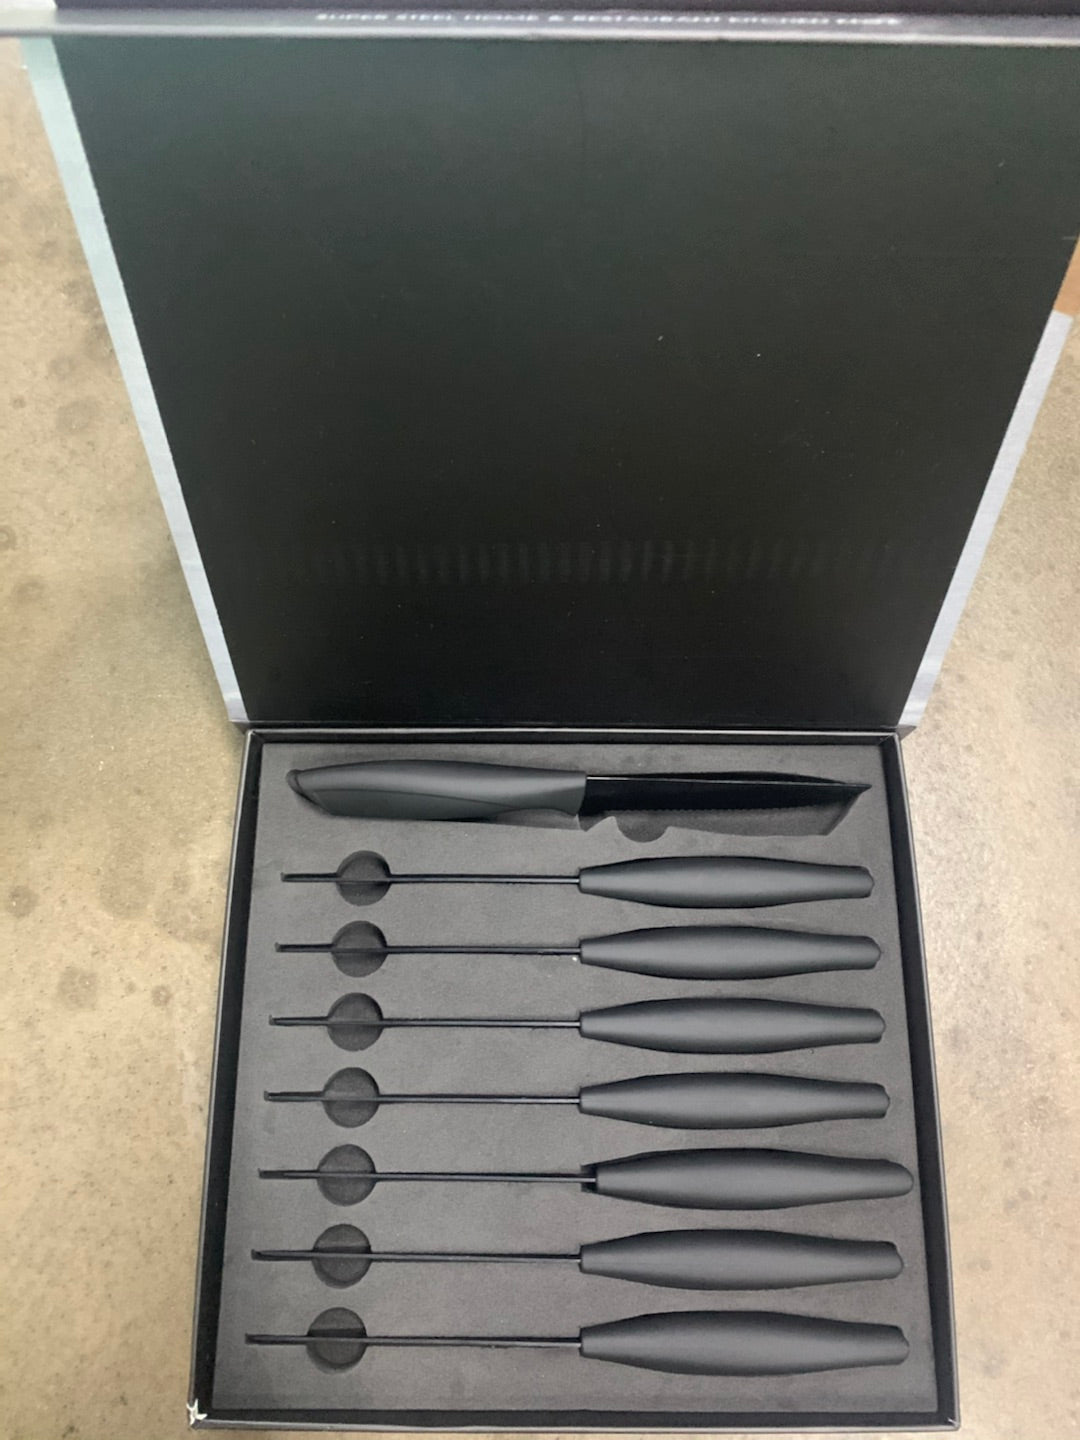 Steak Knives Set of 8, Rainbow Titanium Coated Stainless Steel Steak Knives,  Super Sharp Serrated Steak Knife with Gift Box – AICOOK